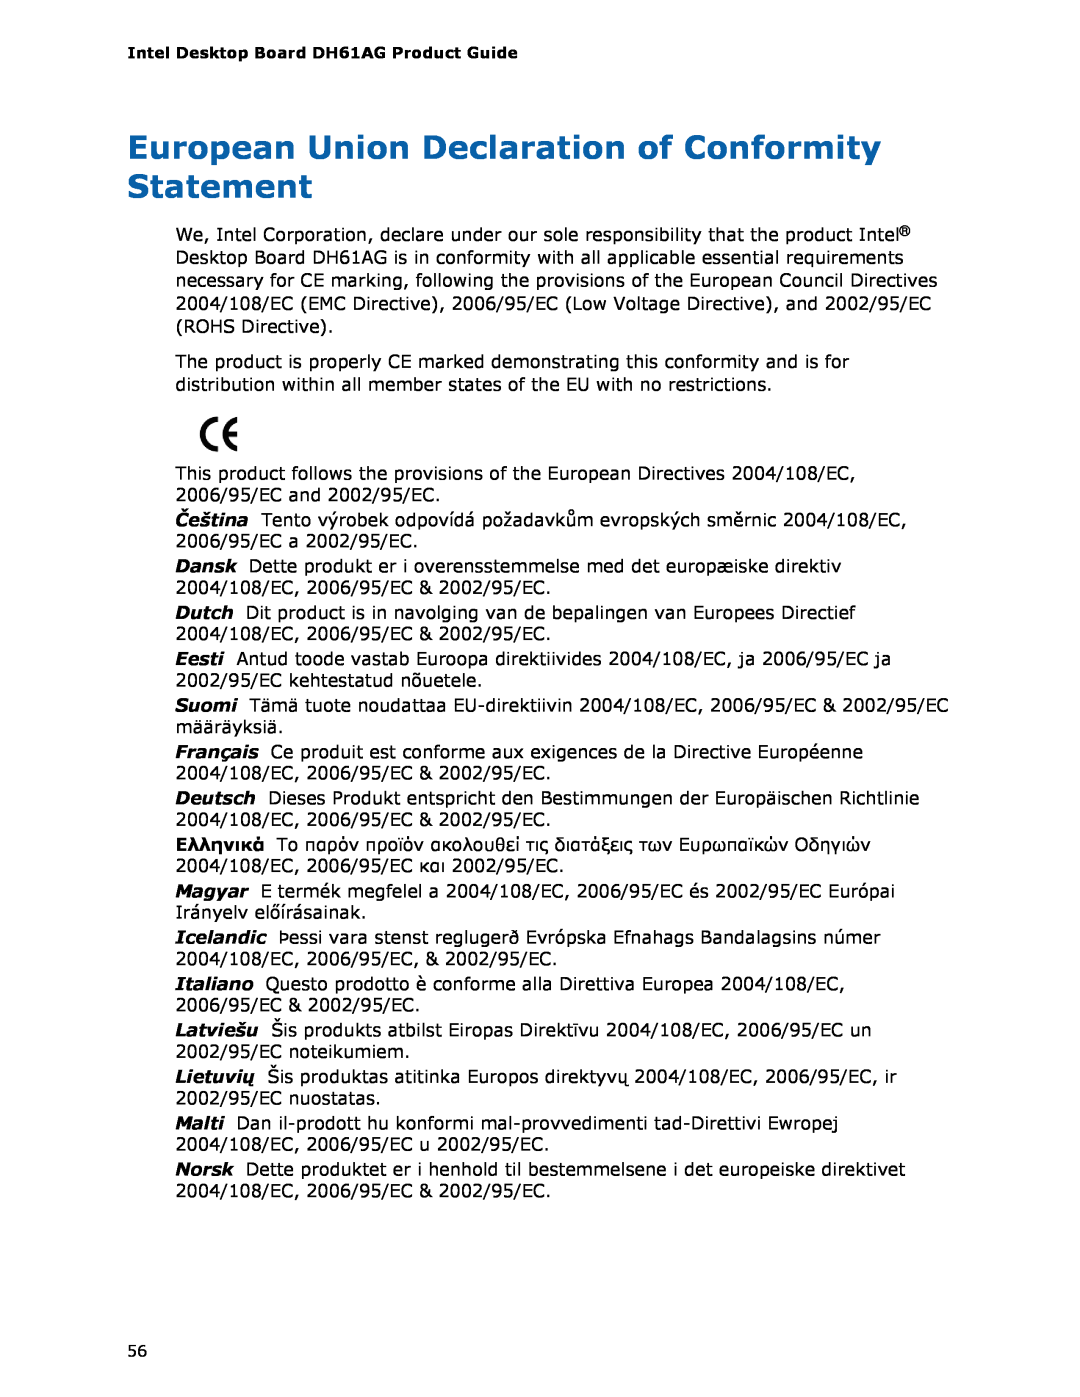 Intel BOXDH61AG manual European Union Declaration of Conformity Statement 